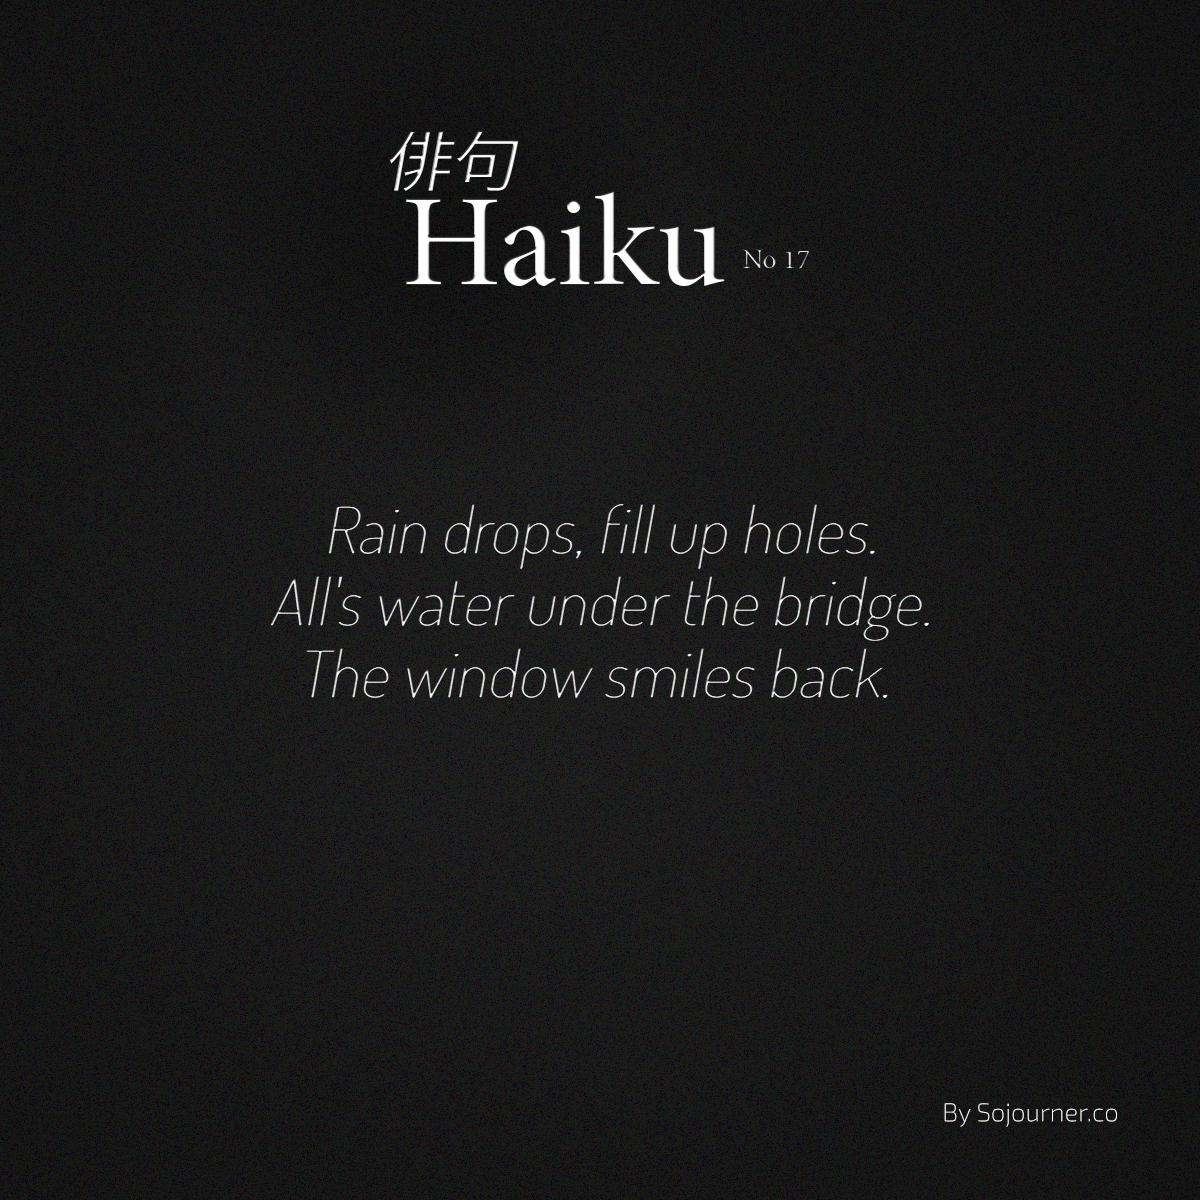 indefiniteloop.com - Haiku No. 17 - The Rains Have Come.